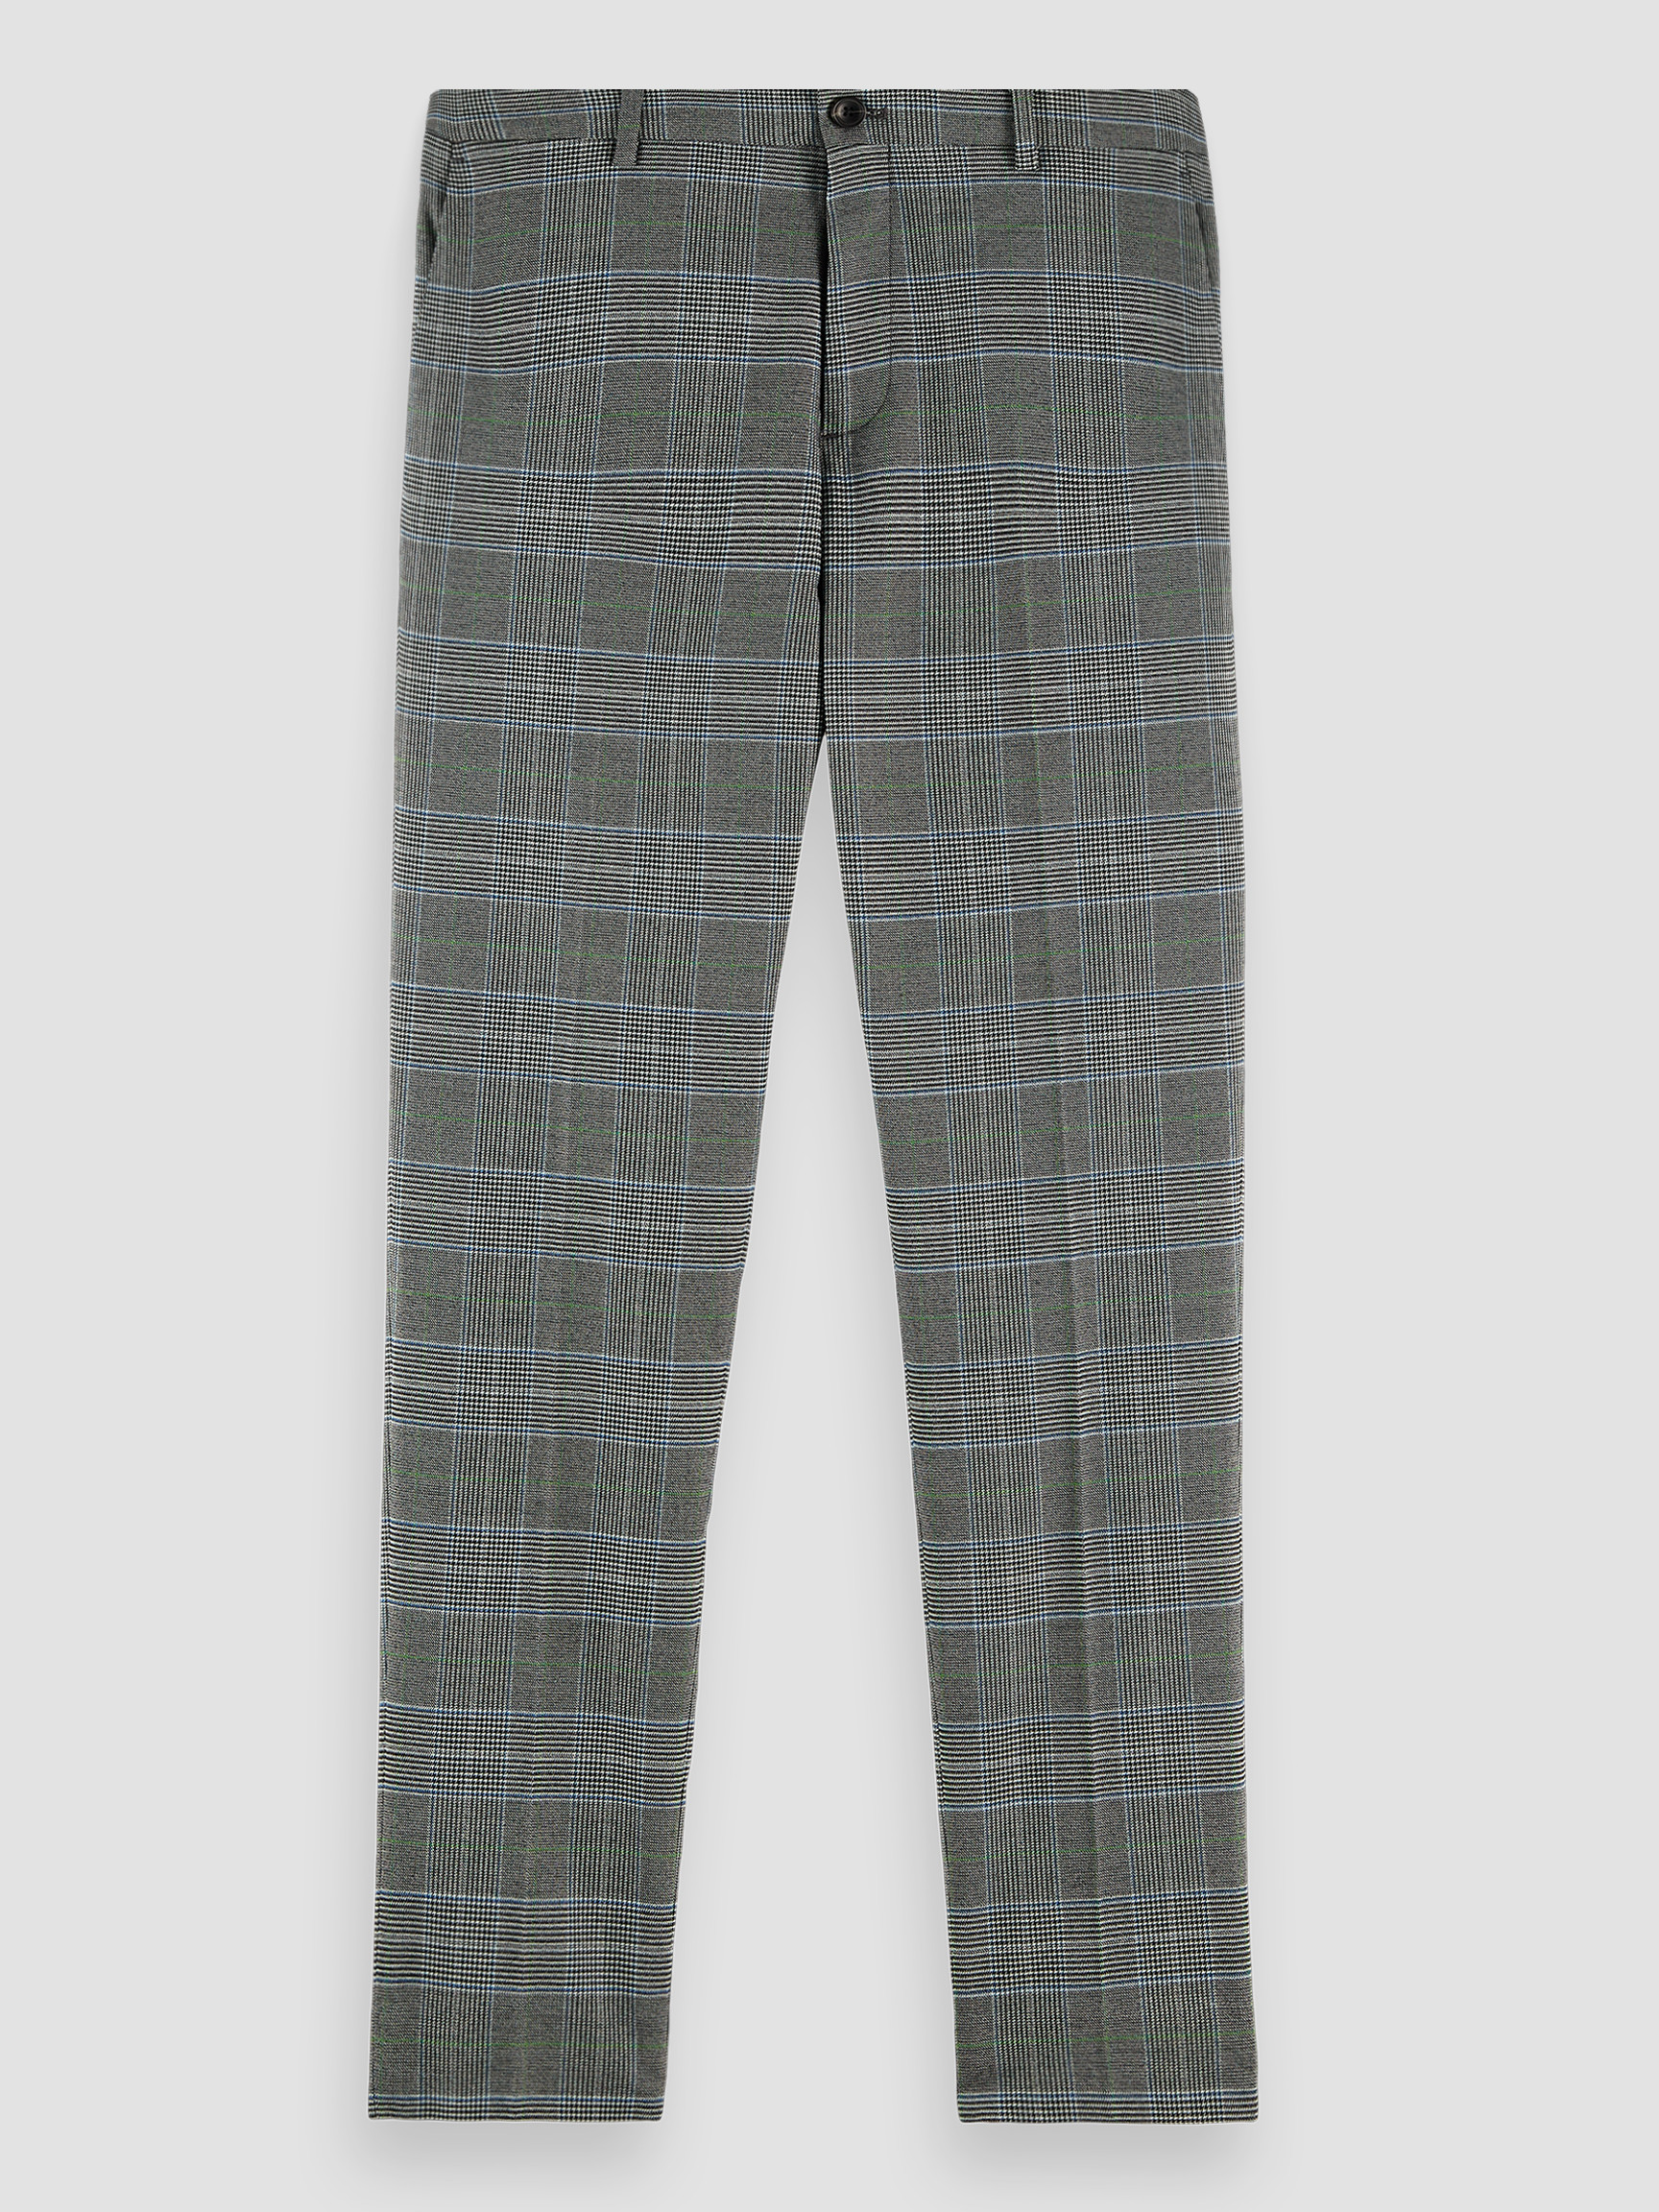 SCOTCH & SODA Men's Khaki Straight Casual Trousers #999 29/32 NWOT – Walk  Into Fashion